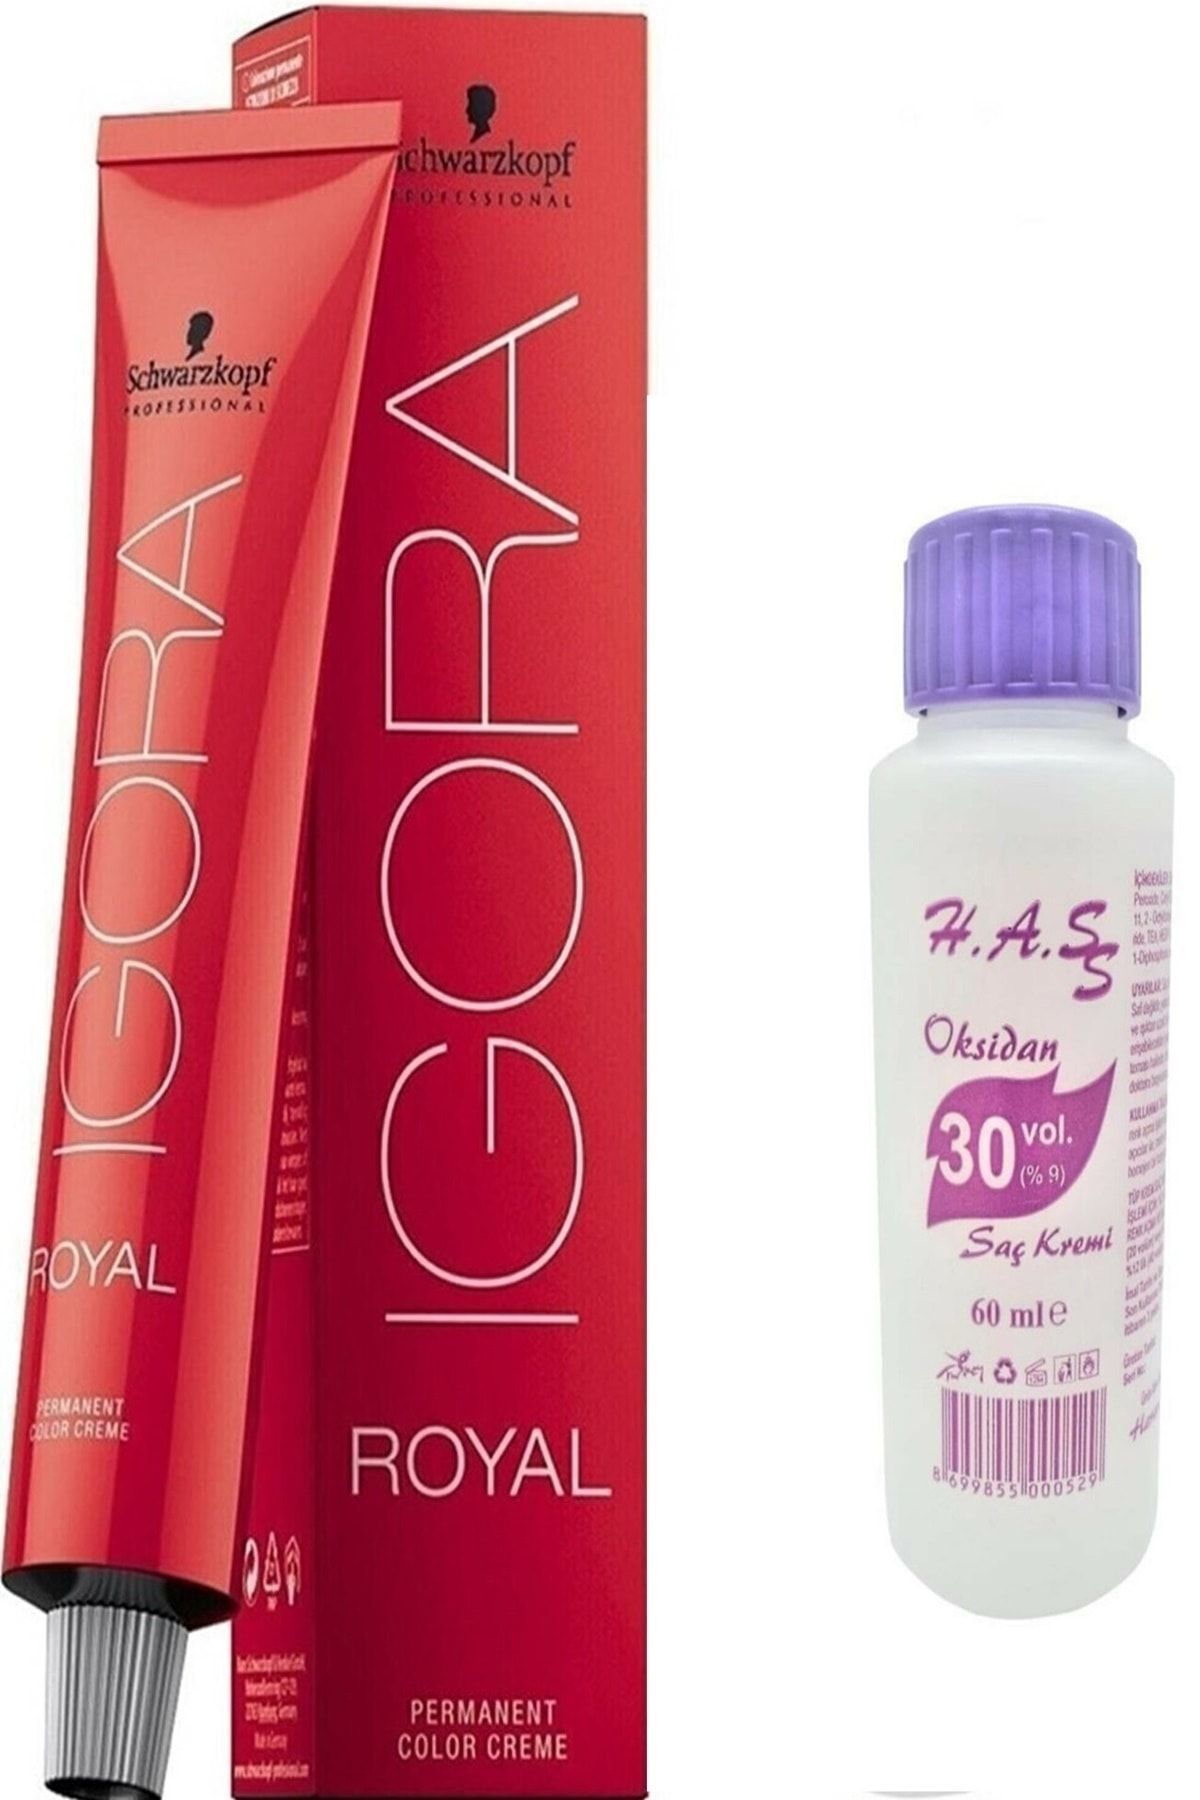 Igora Igora Royal Saç Boyası 9,55 Sarı Yoğun Altın 60 Ml + Mini Oksidan 30 Volüm